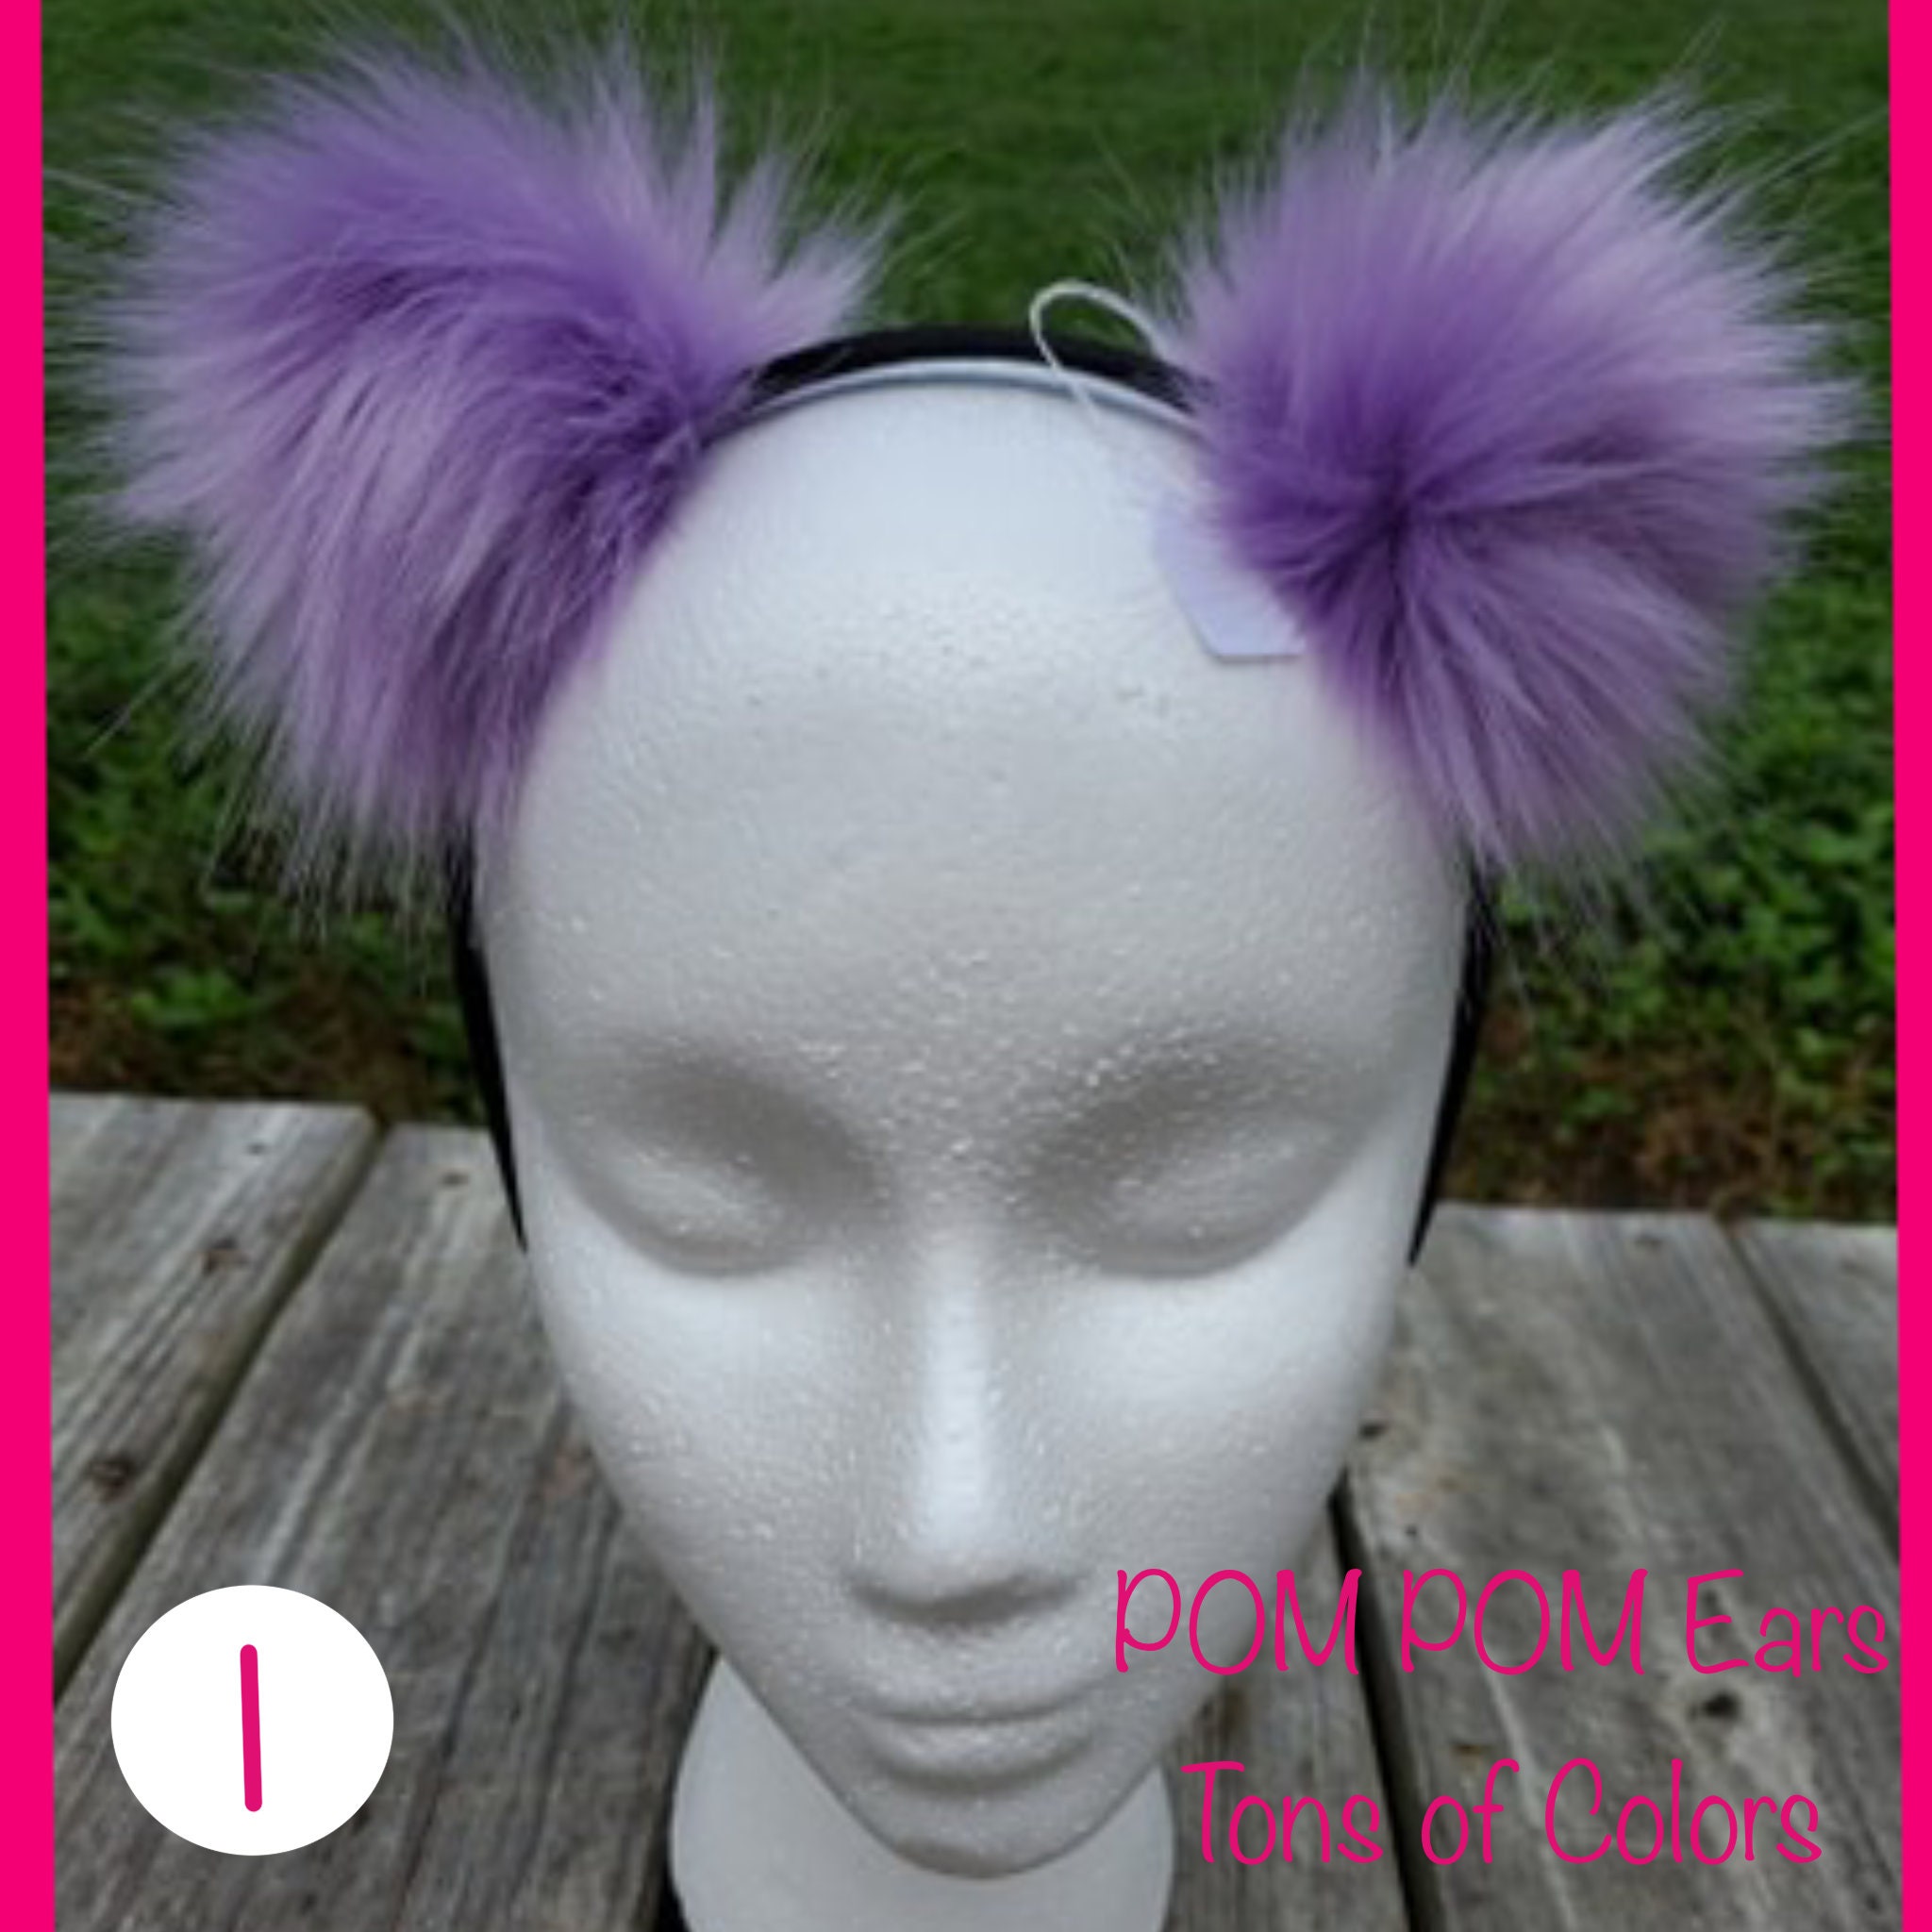 FRCOLOR Bunny Ear Headband 3pcs Fur Ball Headband Prom Tiara Place Girls  Clothes Hair Ribbons for Girls Costume Pom Pom Headband Pink Fur Headband